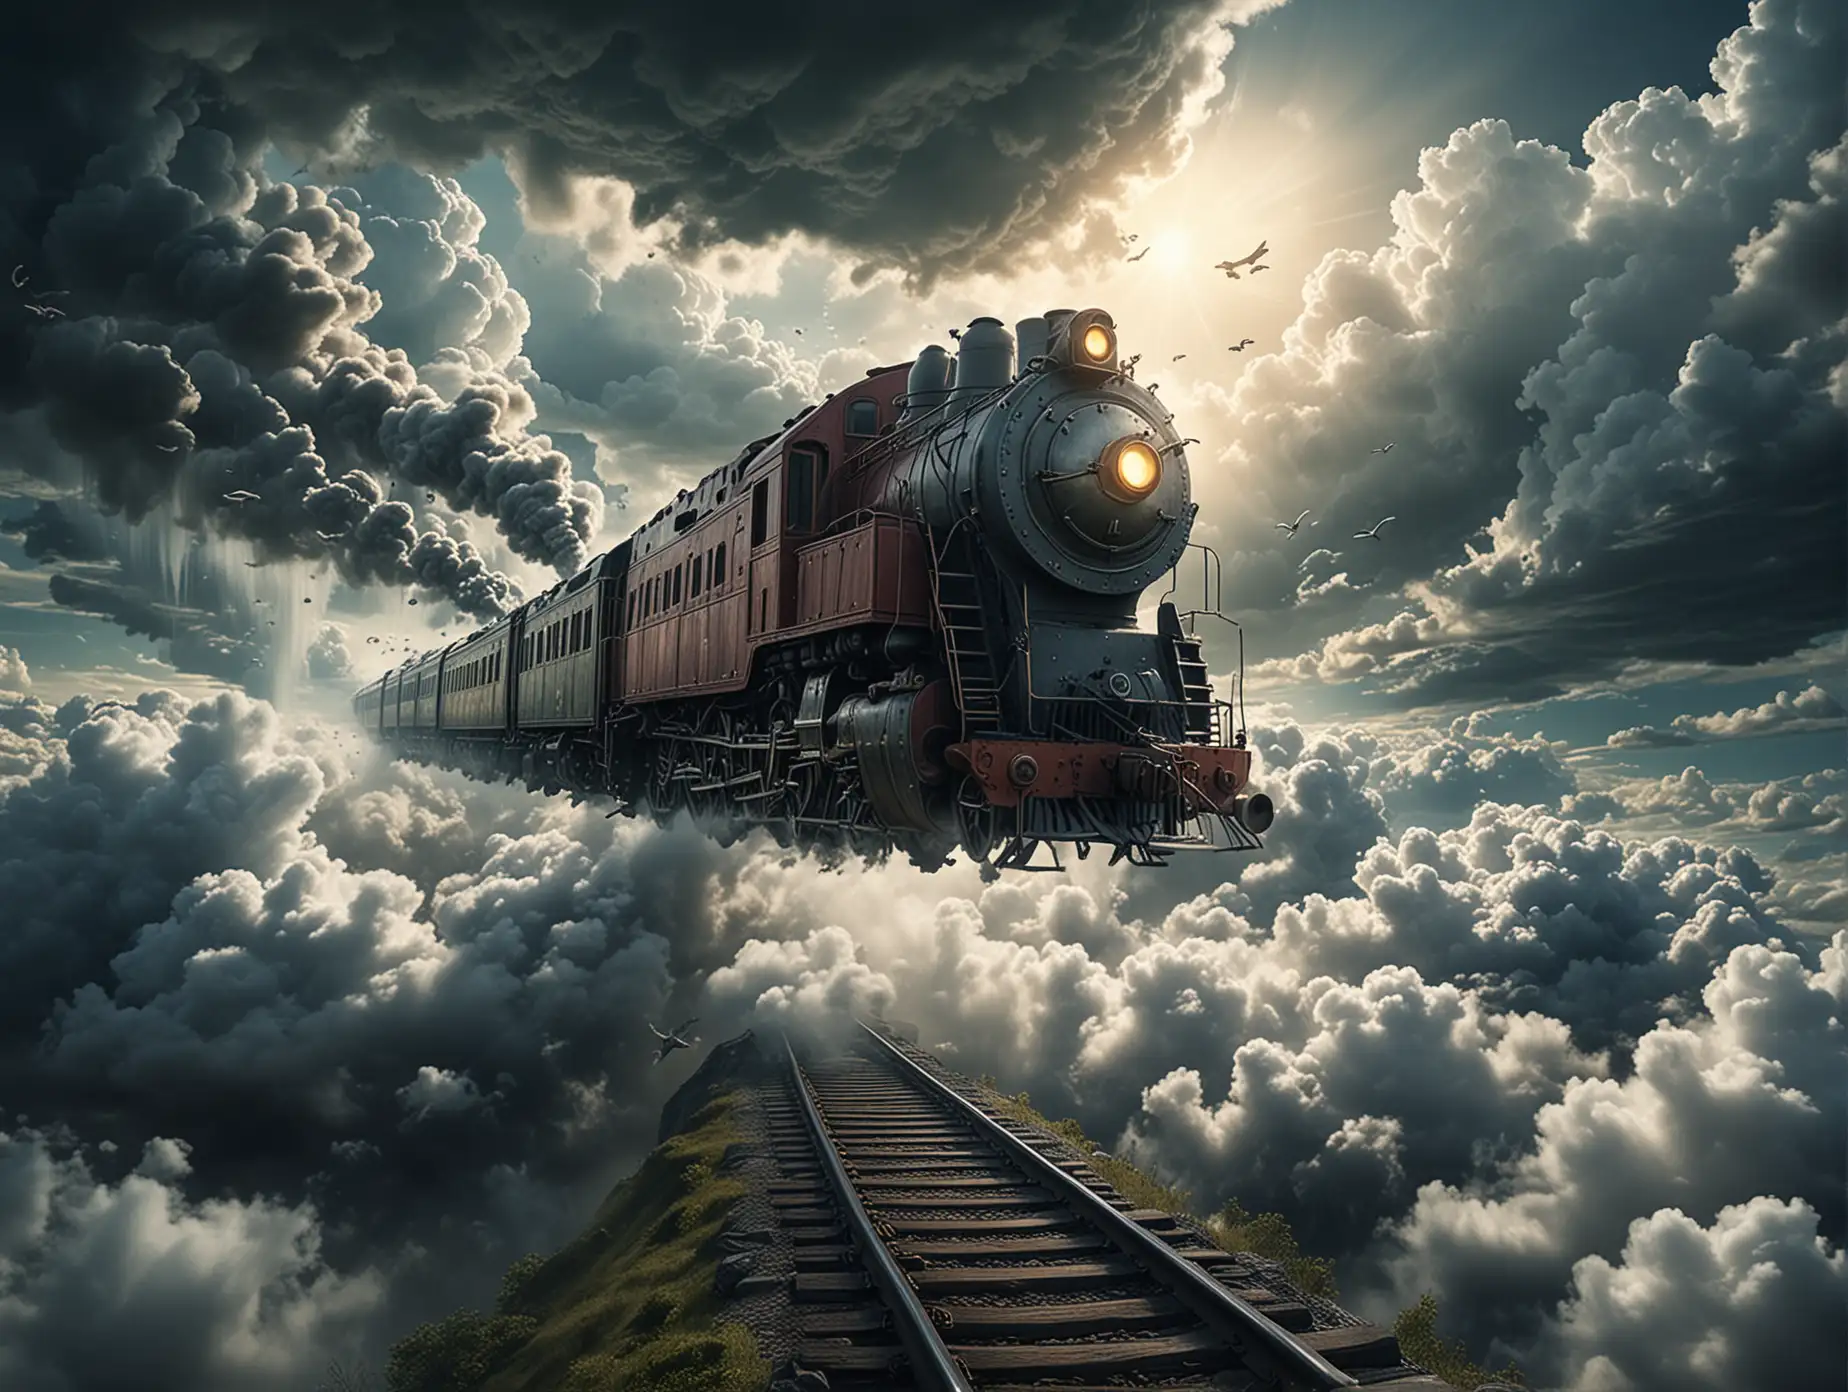 Fantastical Flying Train Soaring Through Clouds